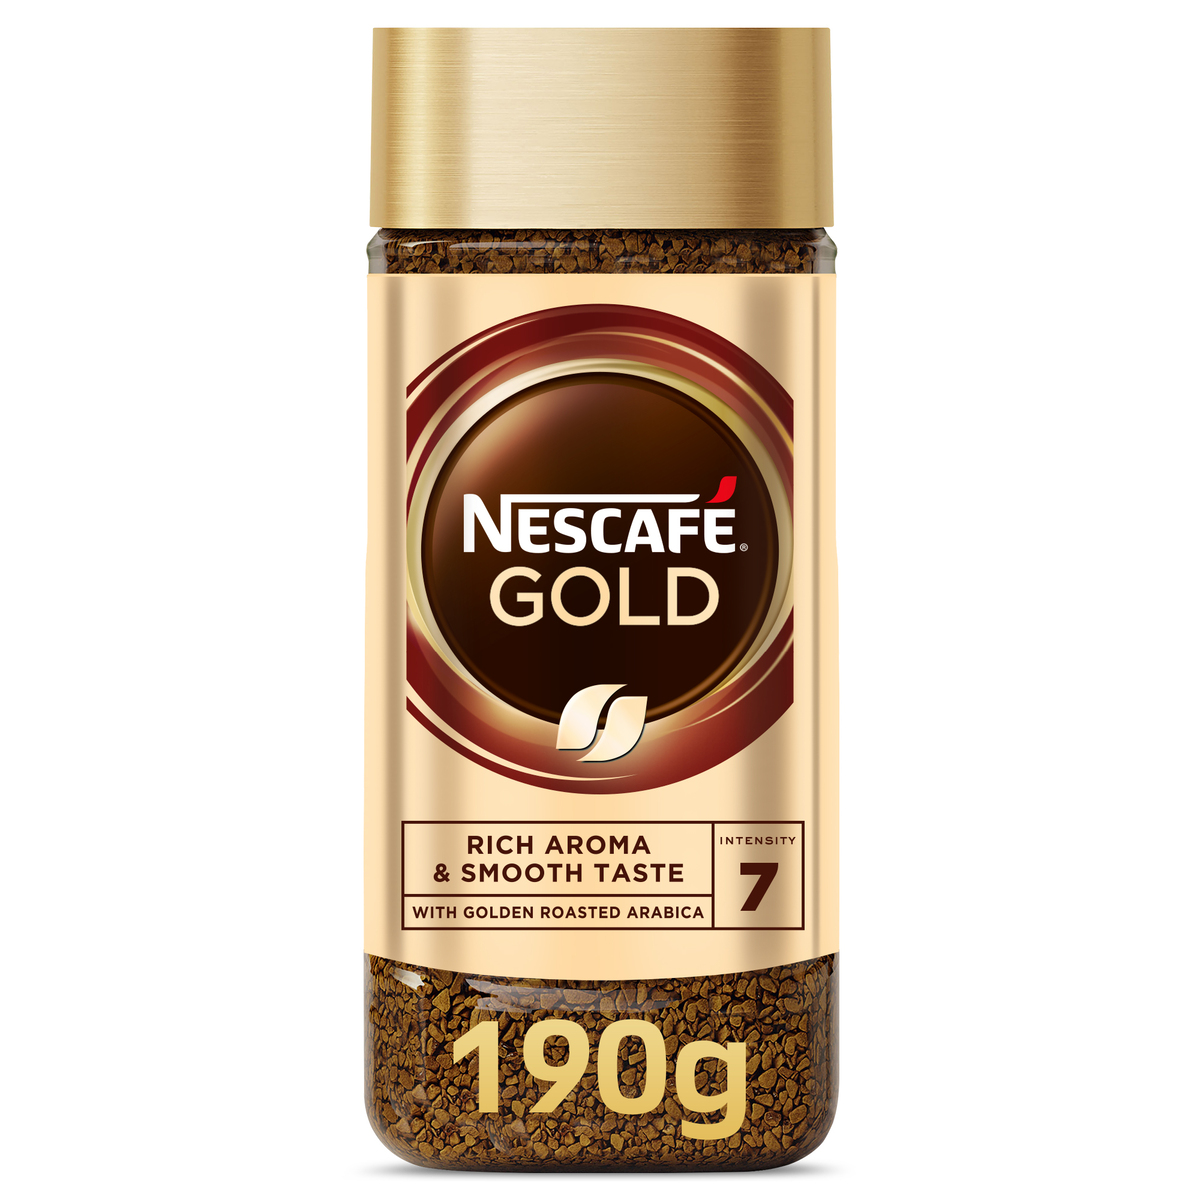 Nescafe Gold Rich Aroma & Smooth Taste Instant Coffee 190g